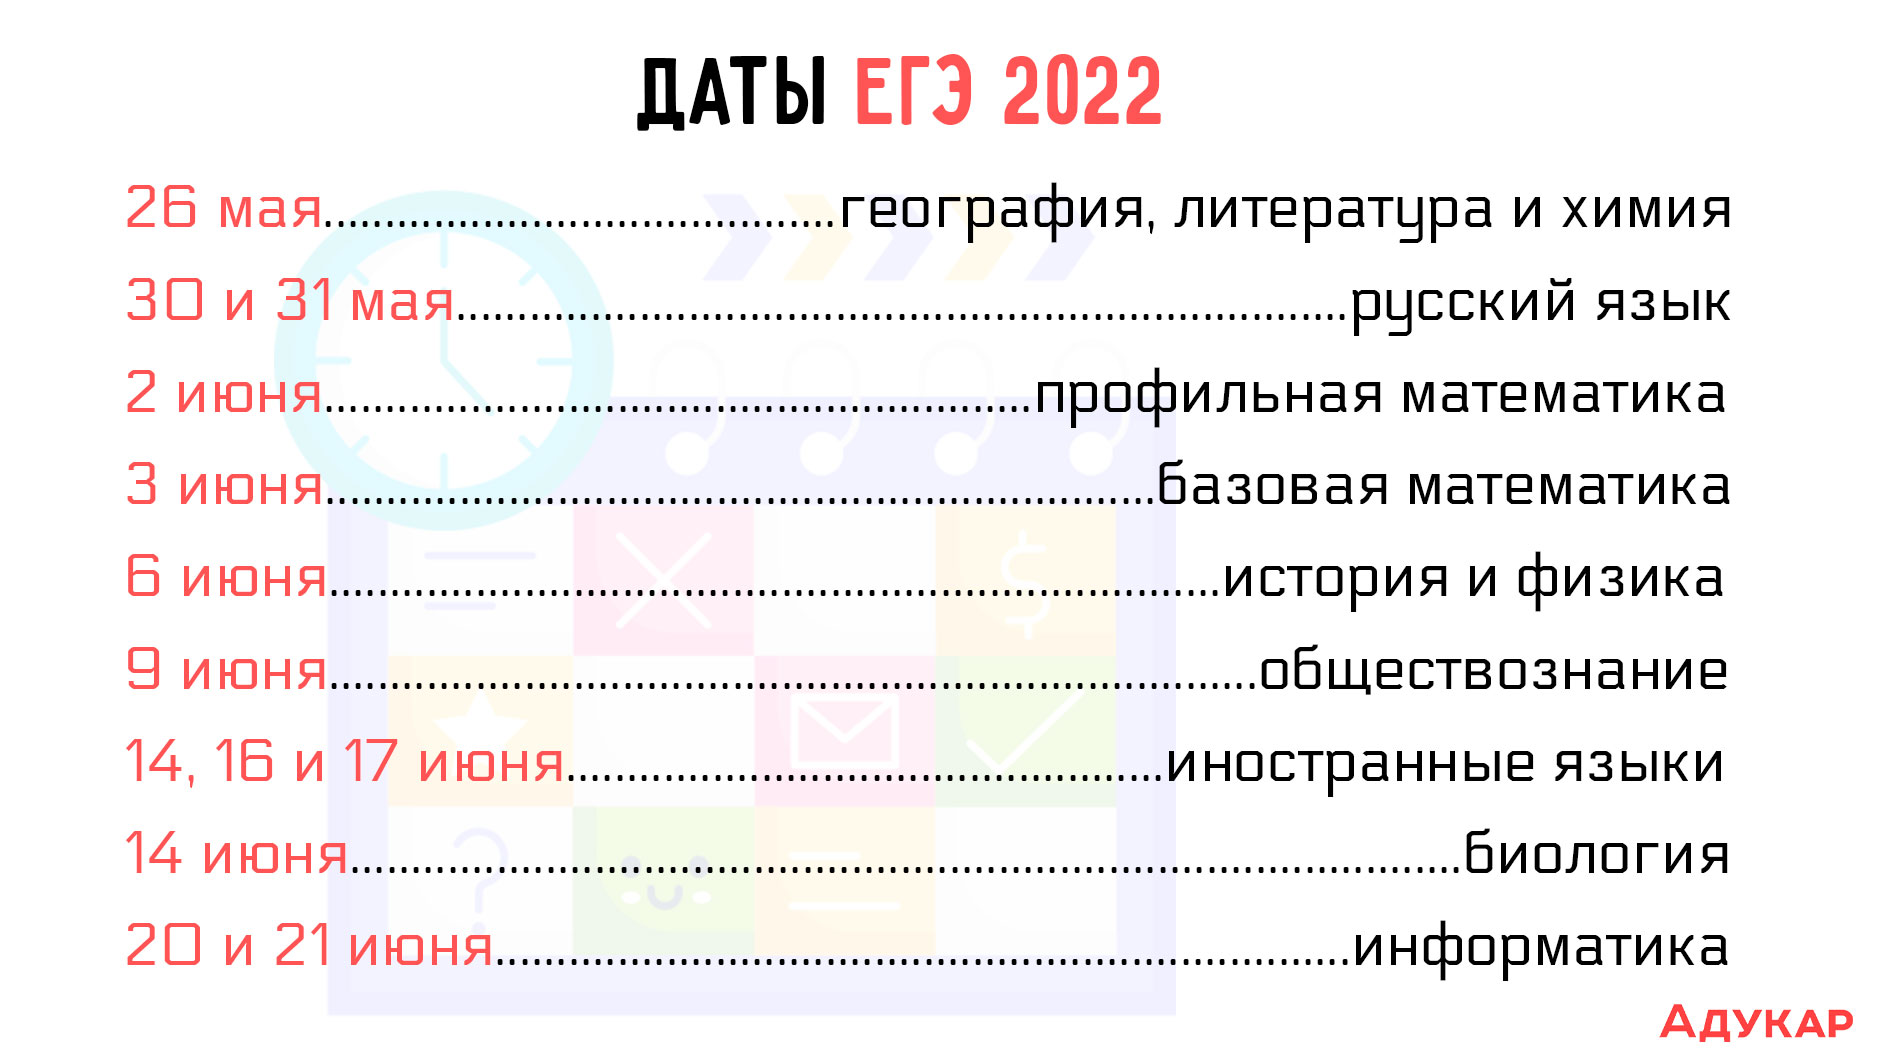 Даты ЕГЭ 2022